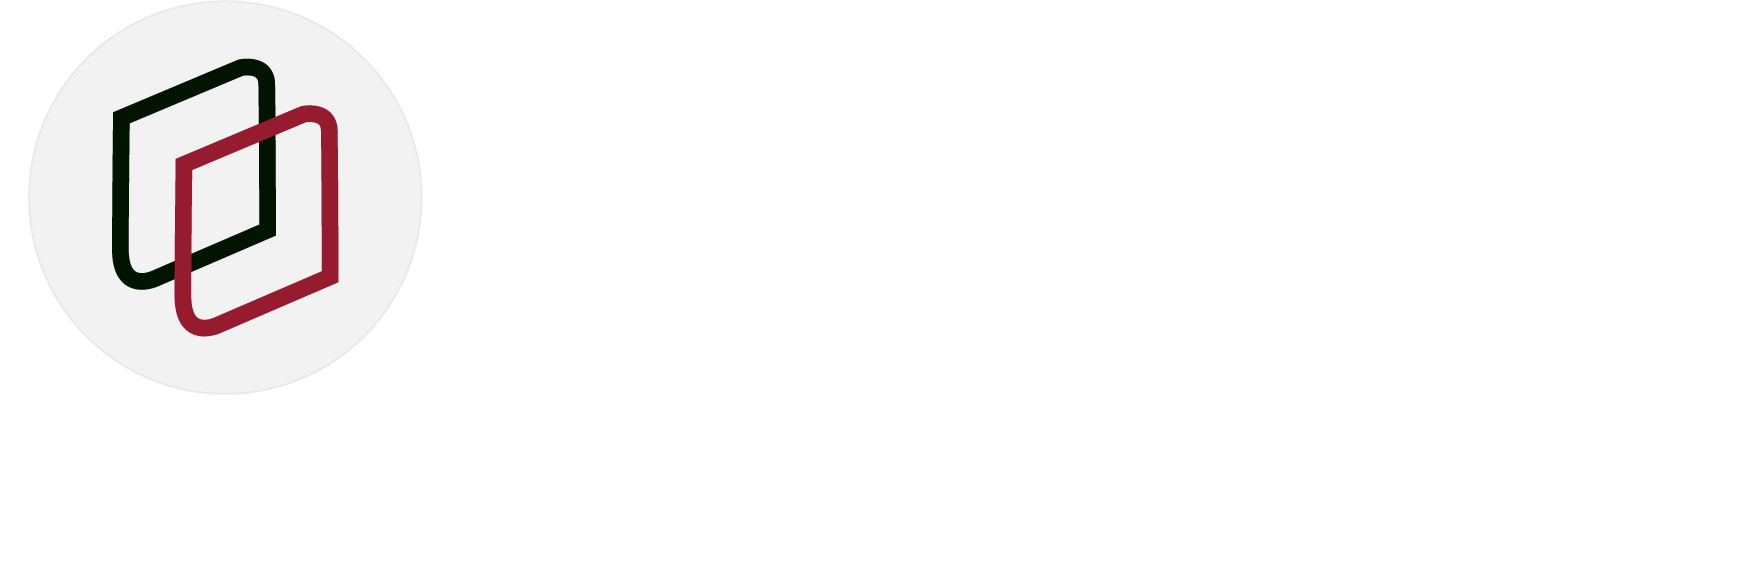 Logo_Publisher for Rhapsody_SodiusWillert_2020_white